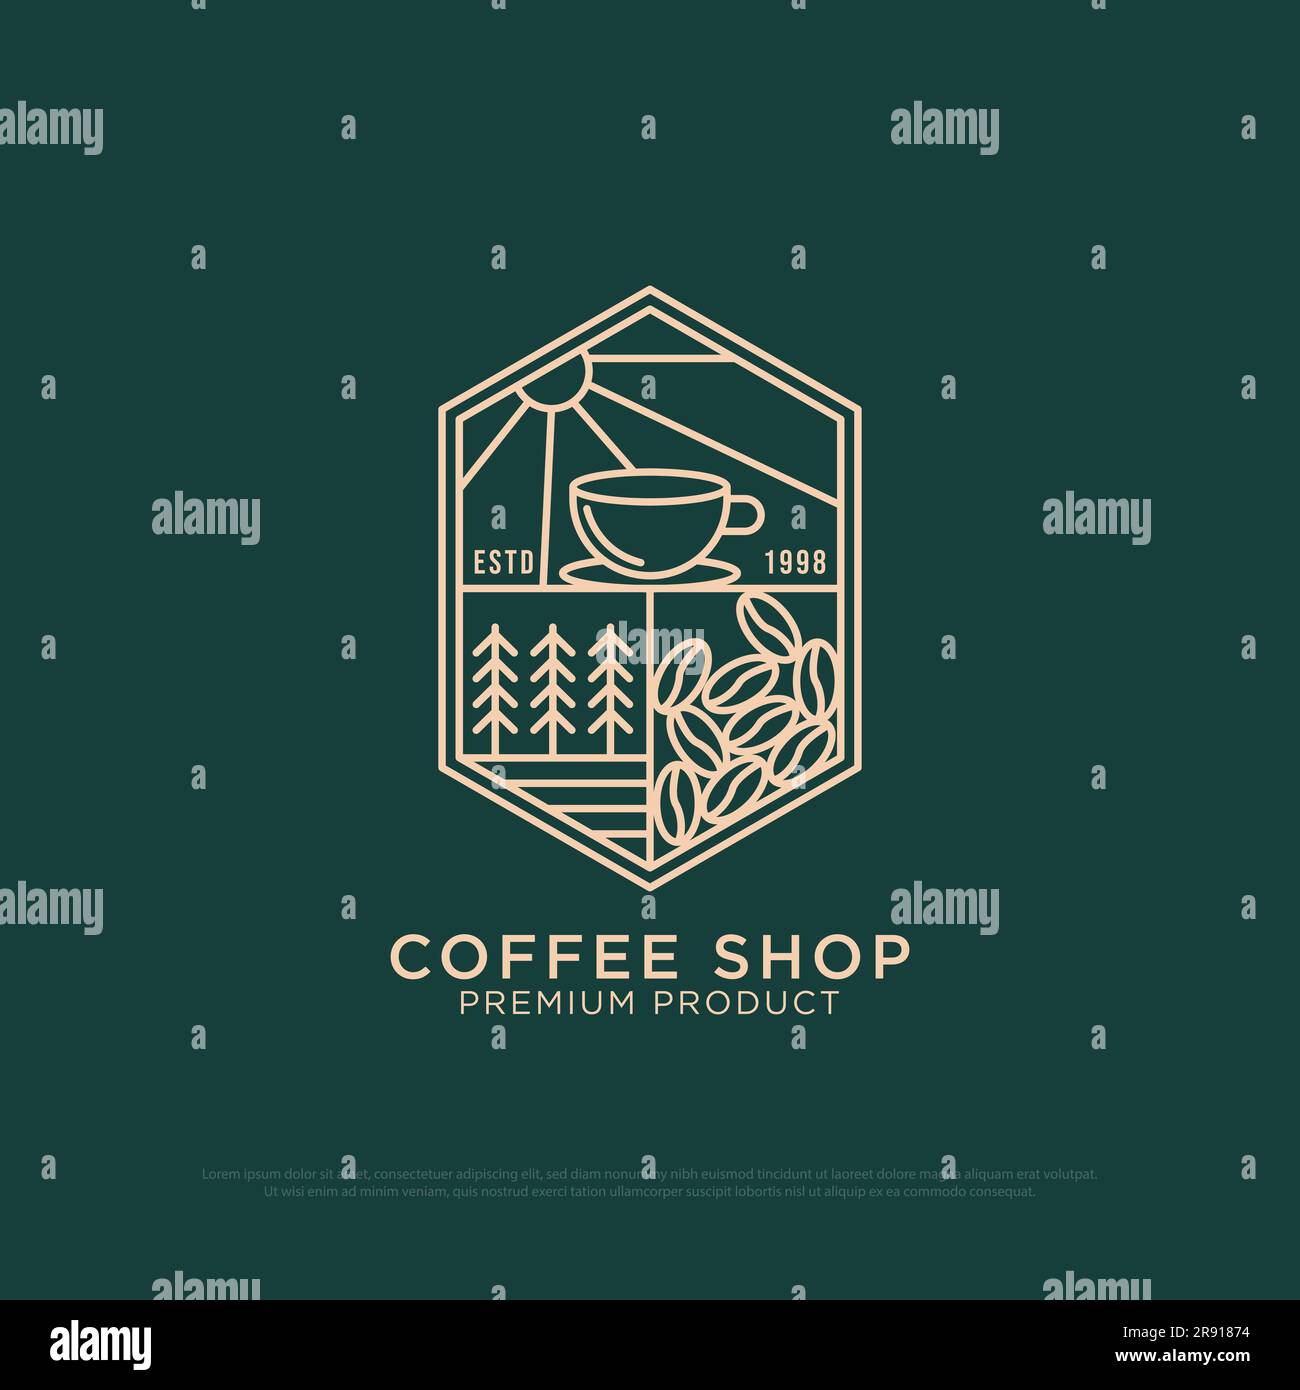 Outdoor coffee Shop logo design vector, vintage coffee logo illustration with outline style, best for restaurant, cafe, beverages logo brand name Stock Vector